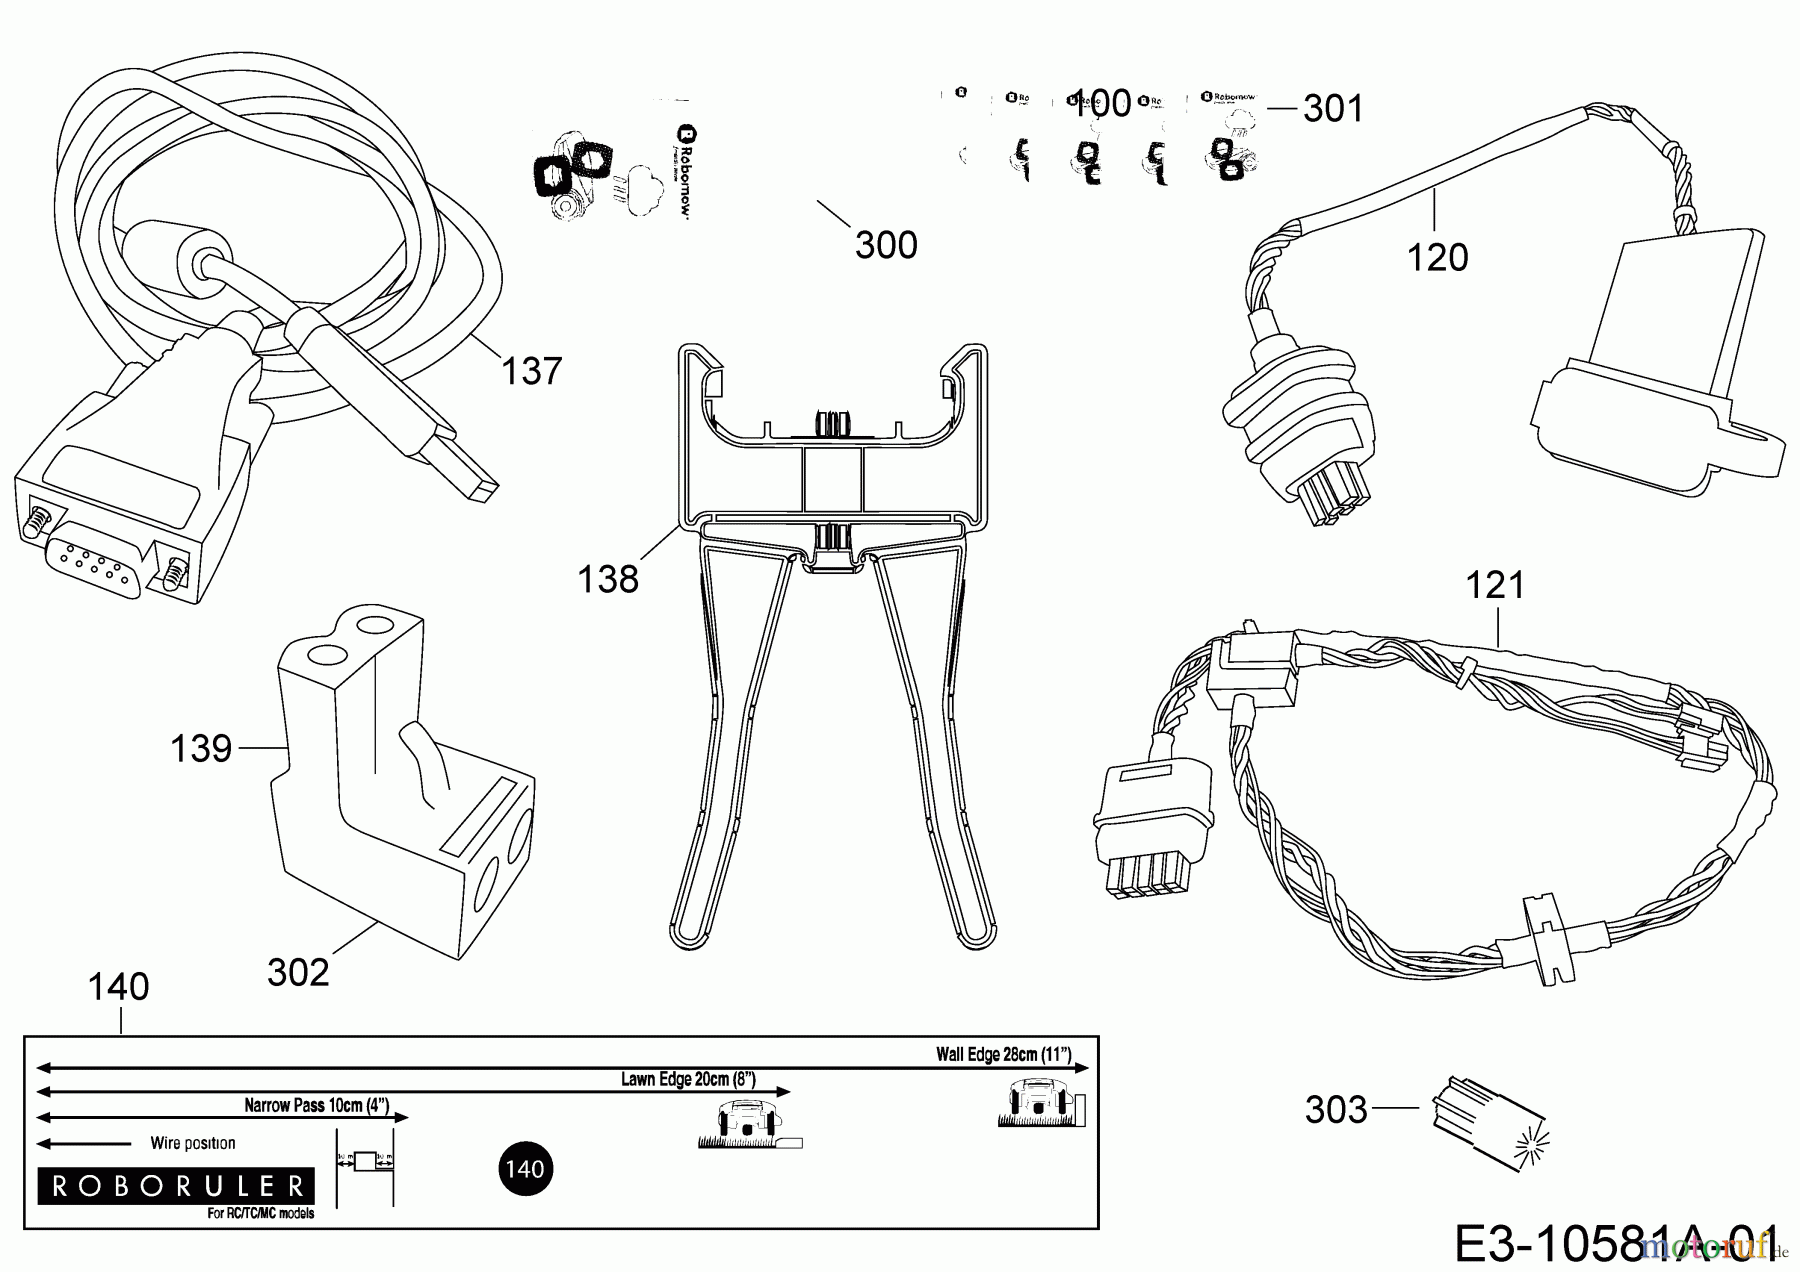  Robomow Mähroboter RC306 PRD7006A  (2014) Kabel, Kabelanschluß, Regensensor, Werkzeug